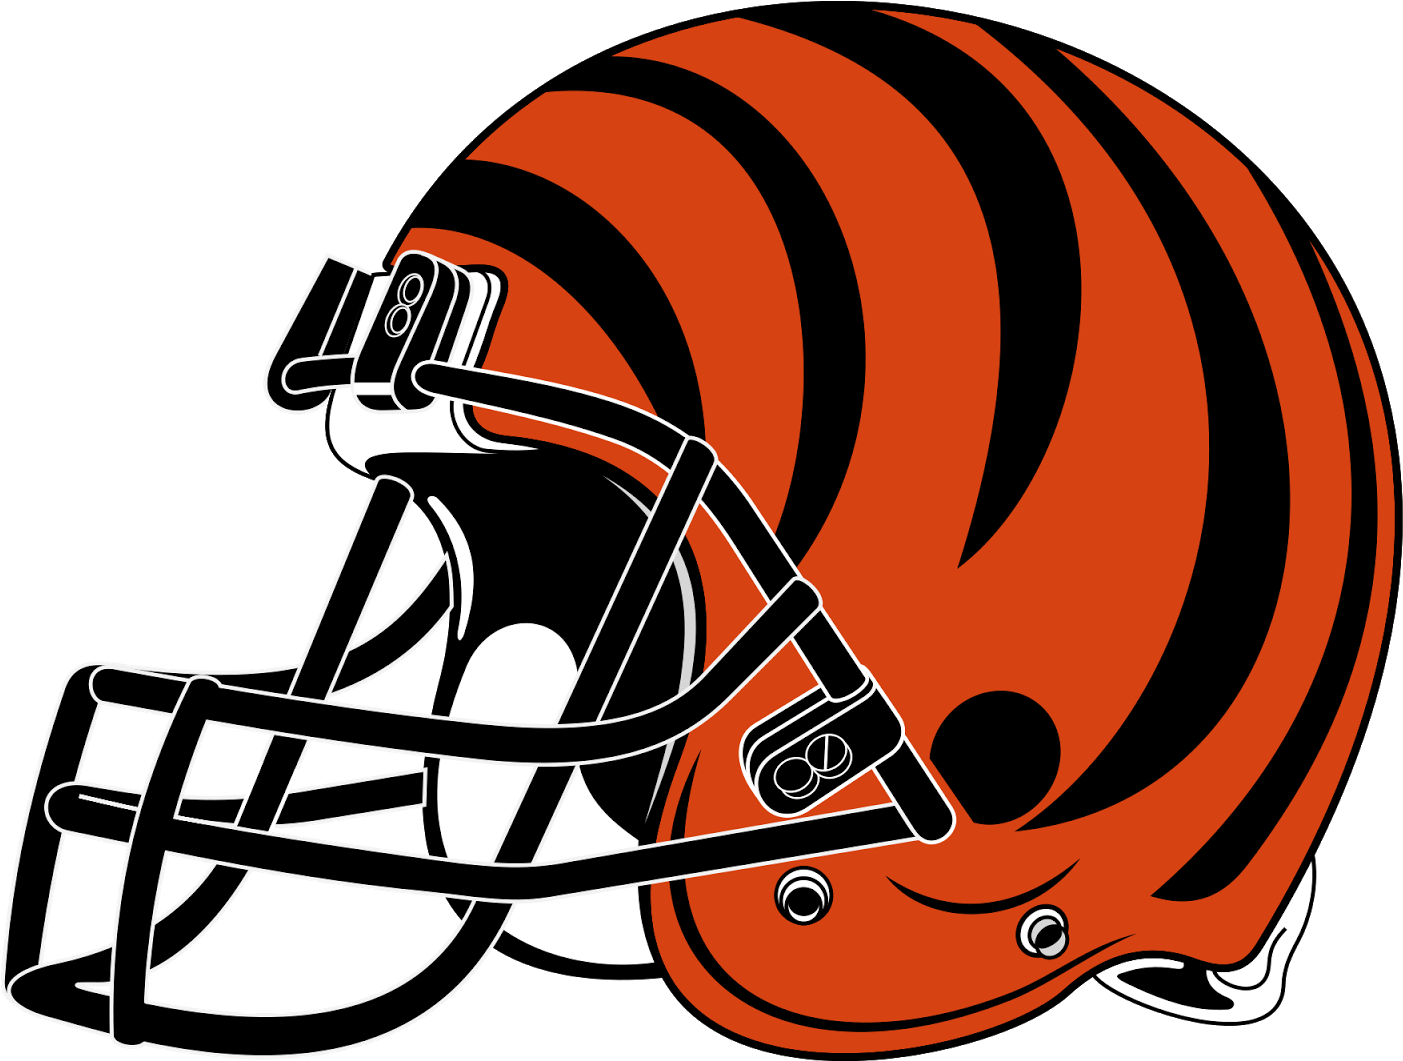 Cincinnati Football Helmet Graphic PNG image